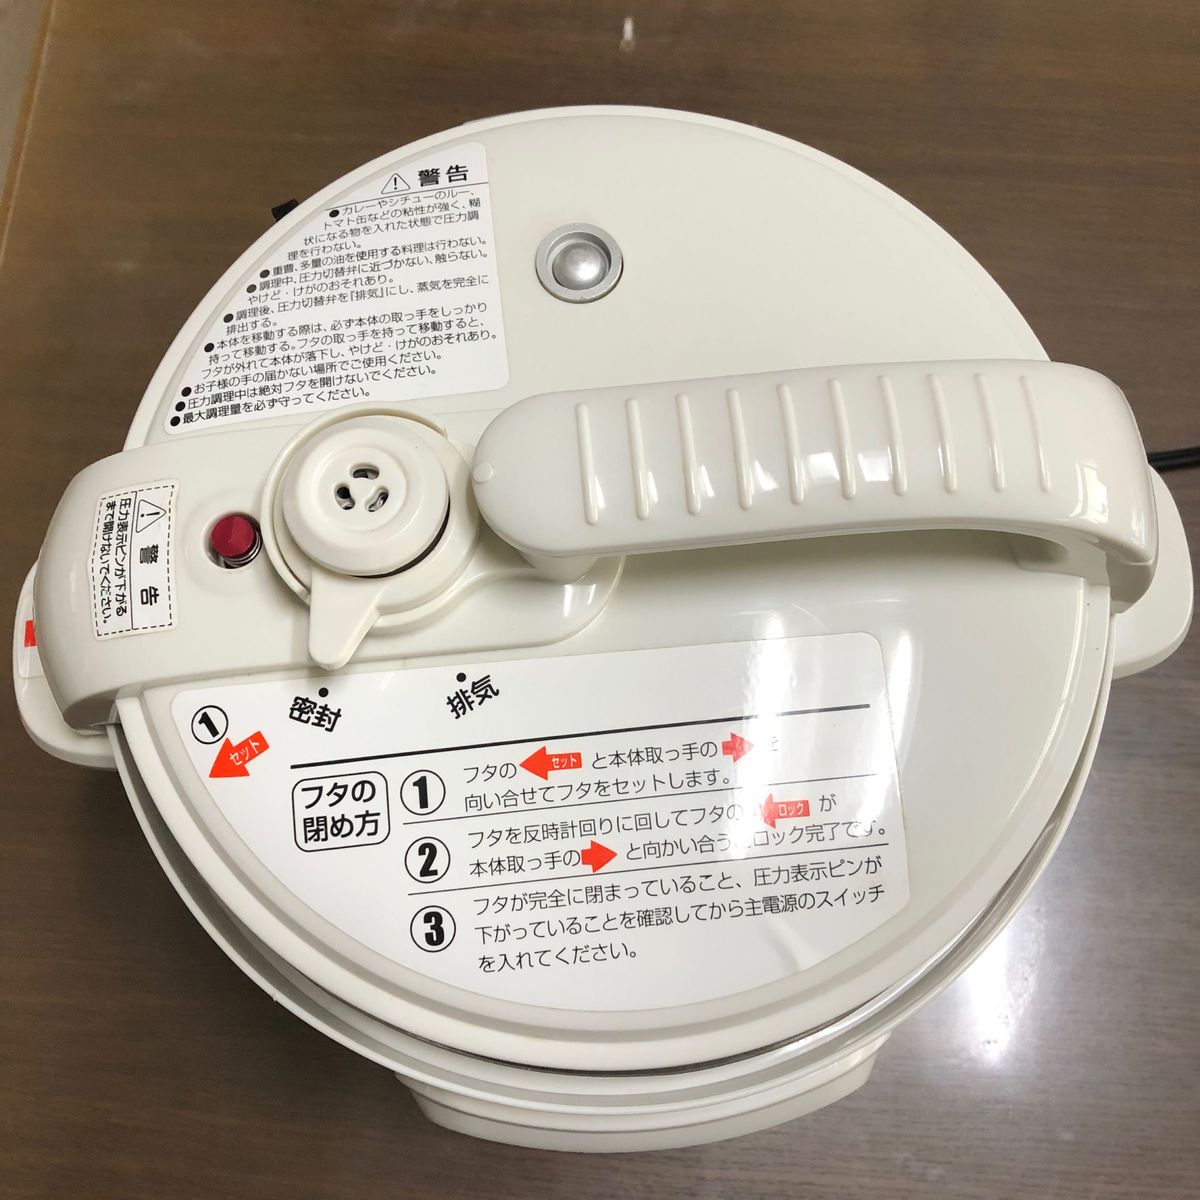 Ｄ&Ｓ家庭用マイコン電気圧力鍋